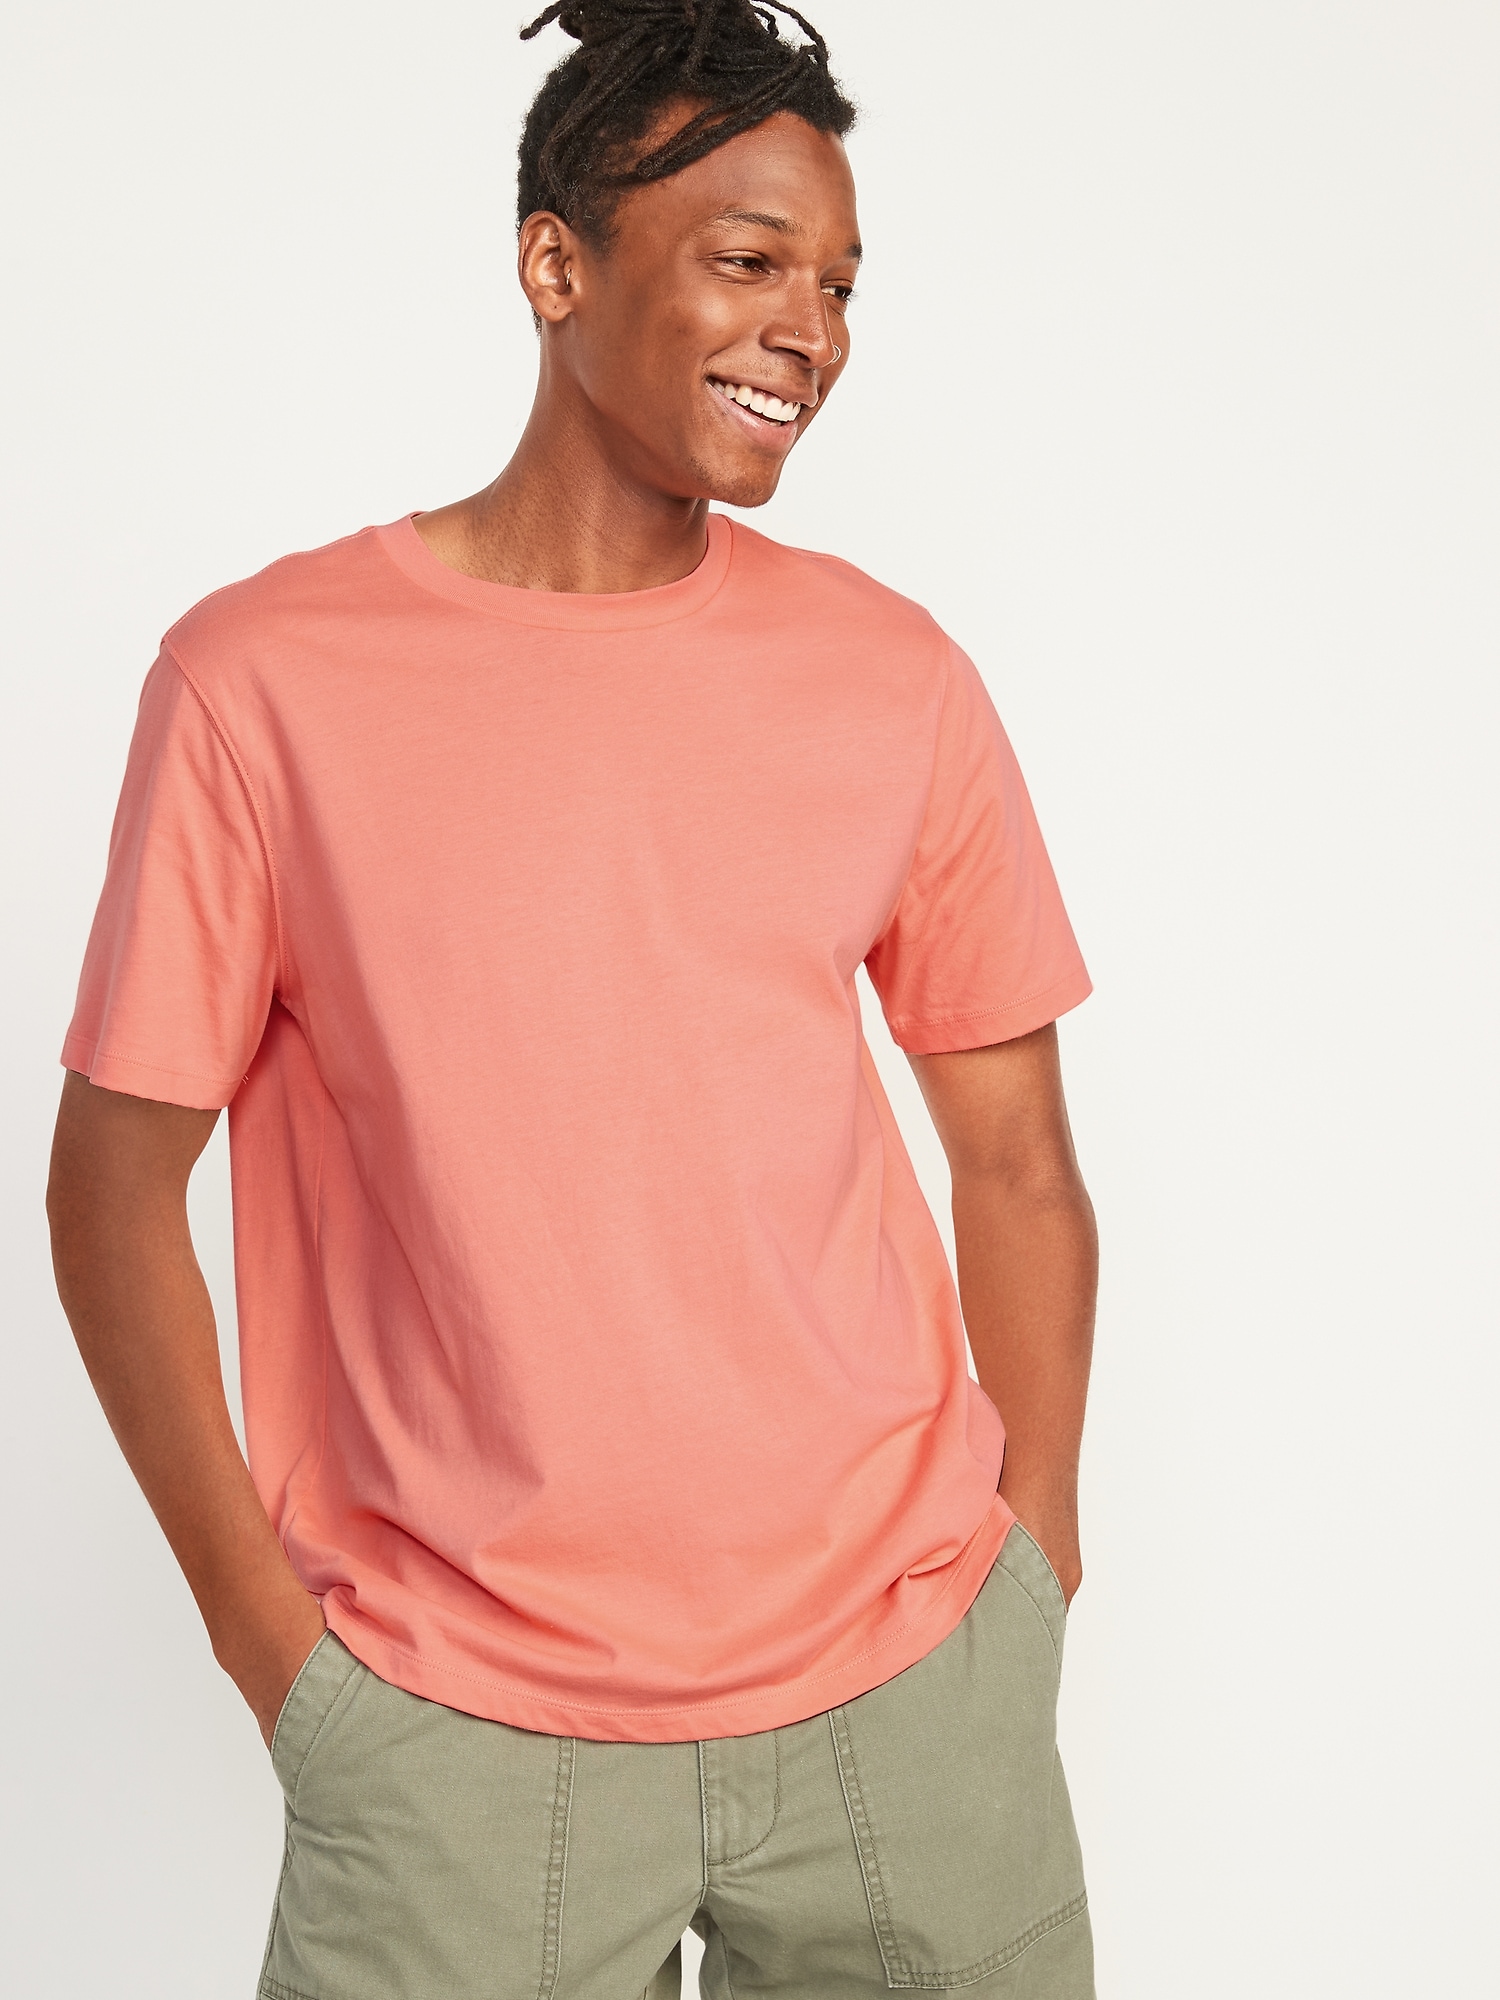 Old Navy Soft-Washed Crew-Neck T-Shirt for Men pink. 1